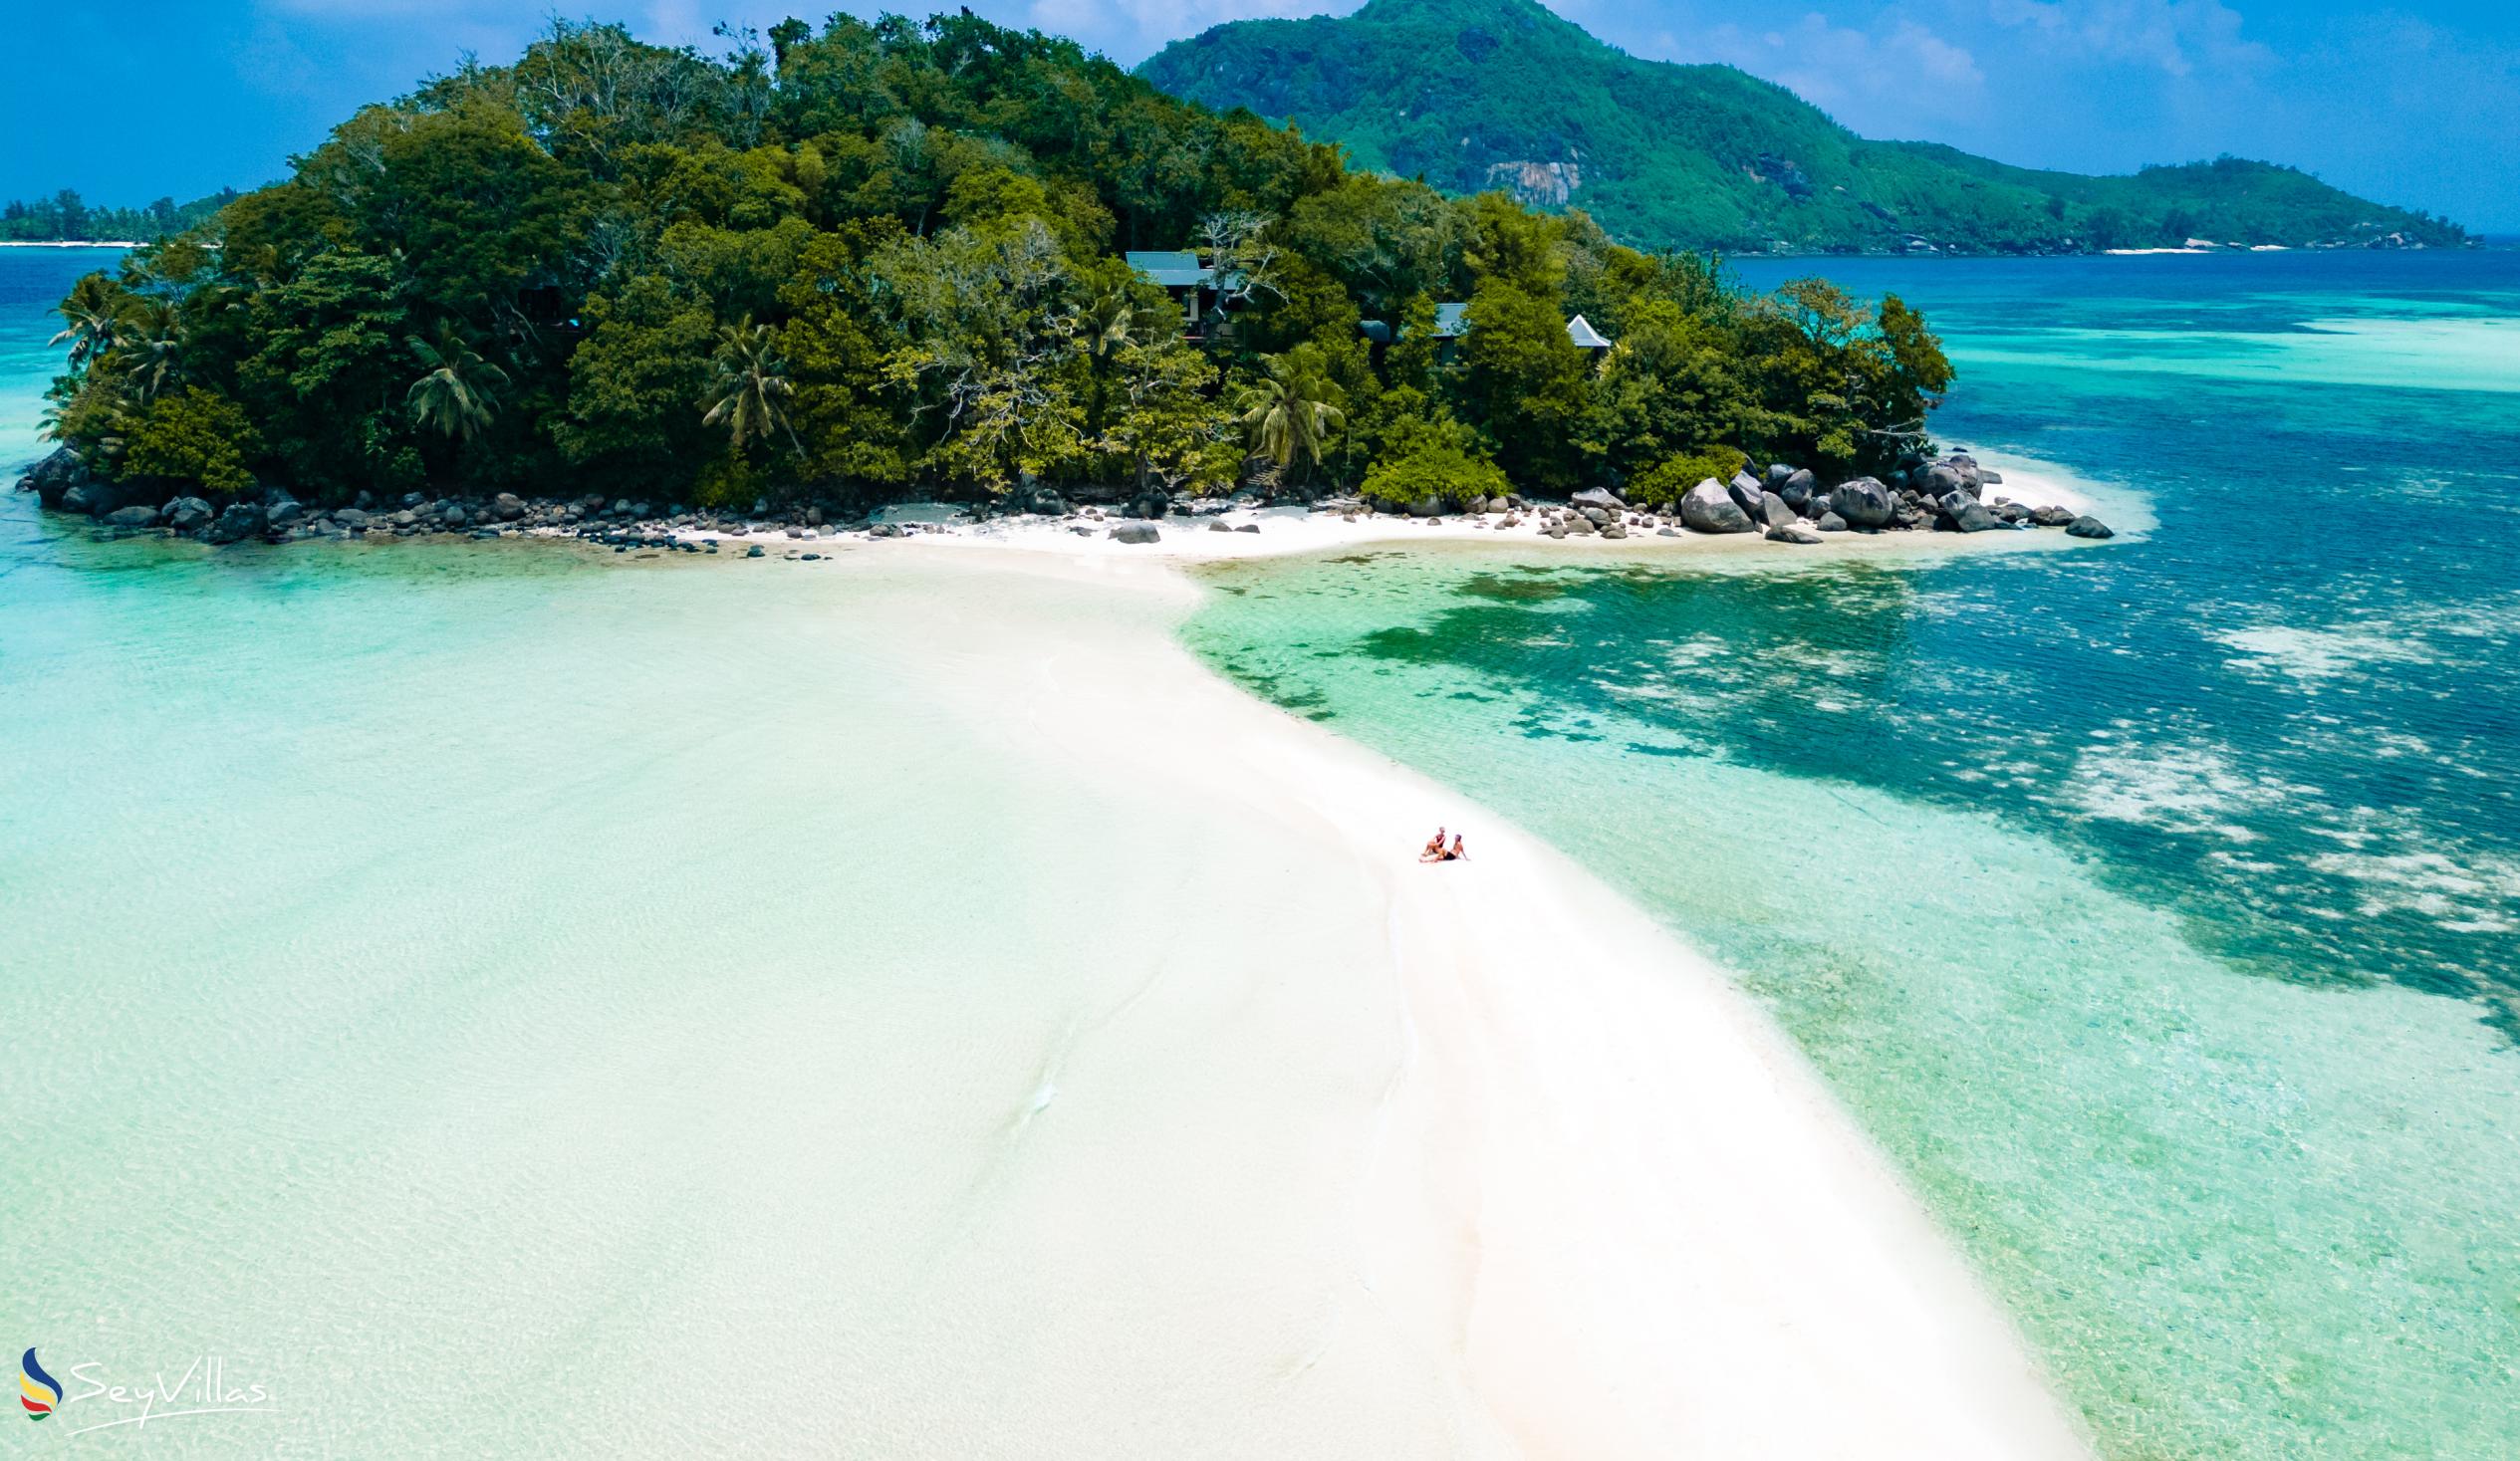 Photo 12: JA Enchanted Island Resort - Location - Round Island (Seychelles)